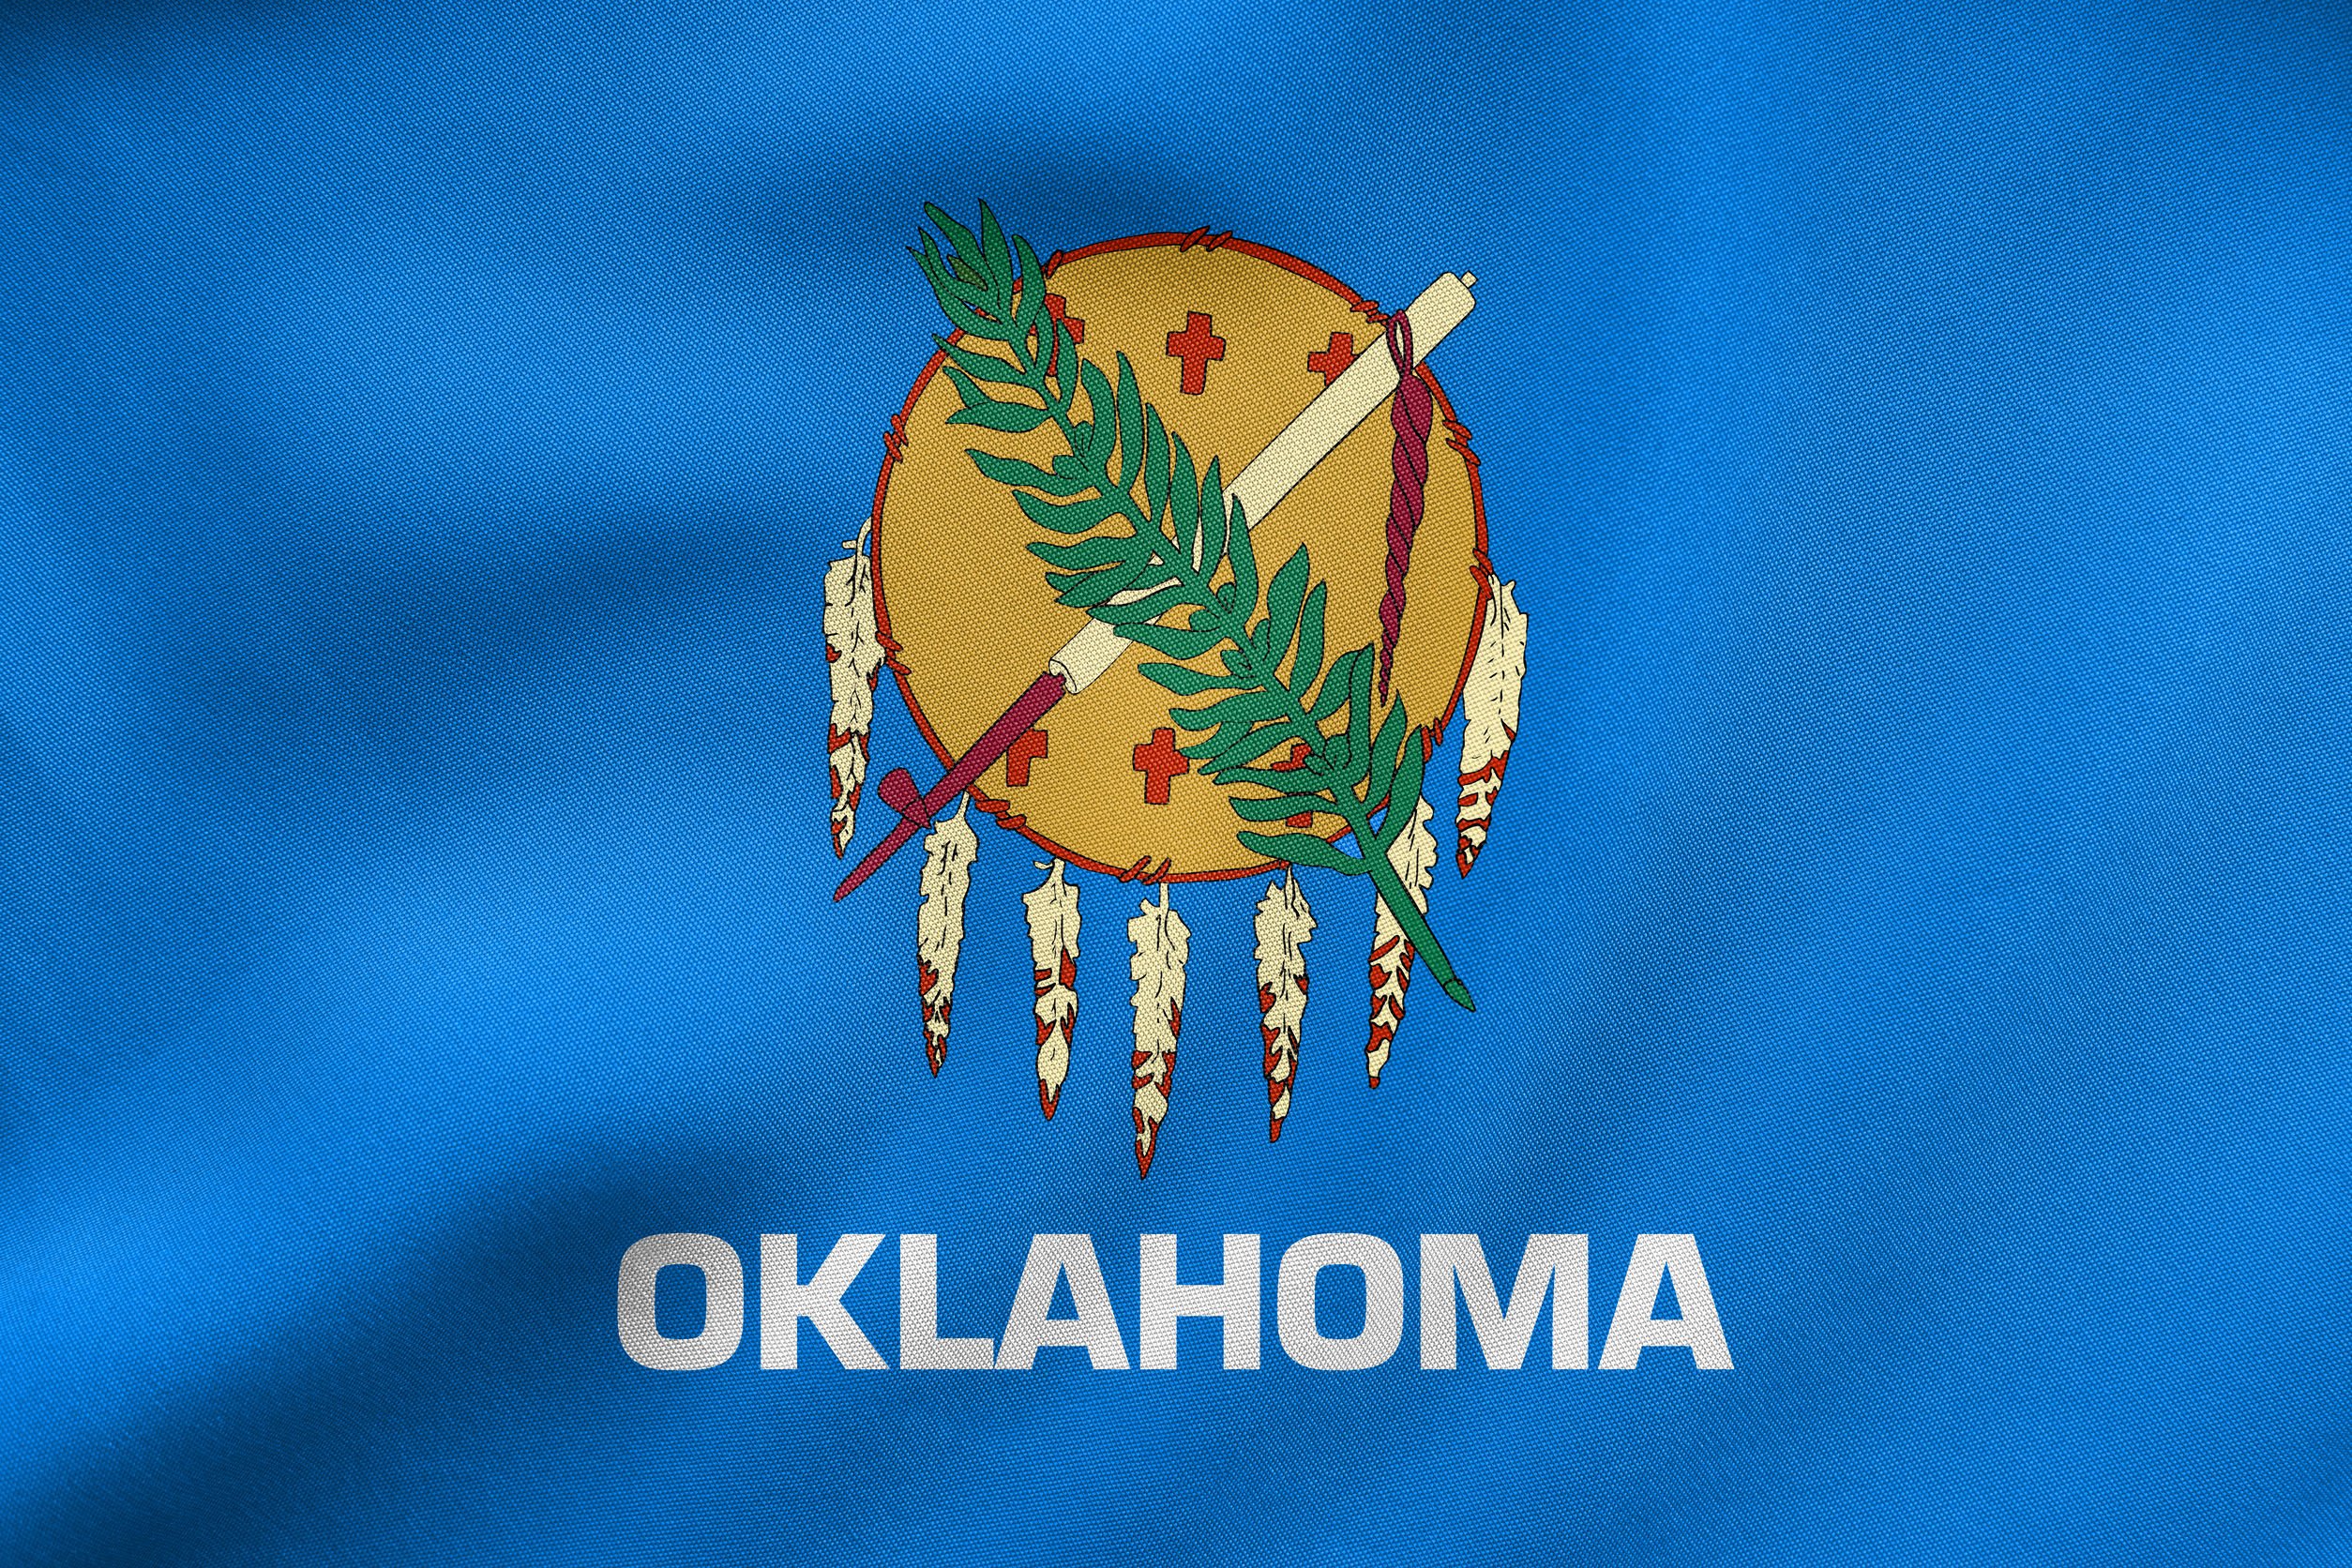 Oklahoma has OK’d more than 1,000 medical marijuana businesses